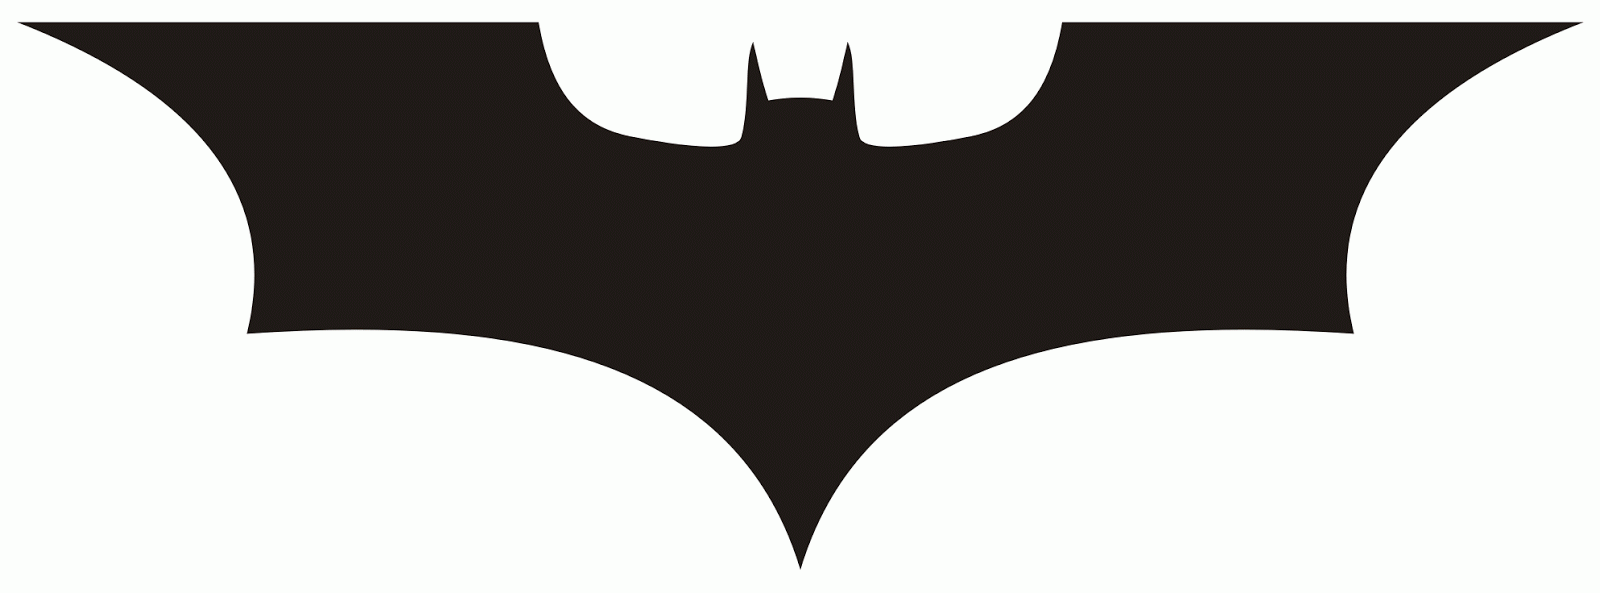 Dibujos en tela: Dos estilos de dibujo I parte. Batman.